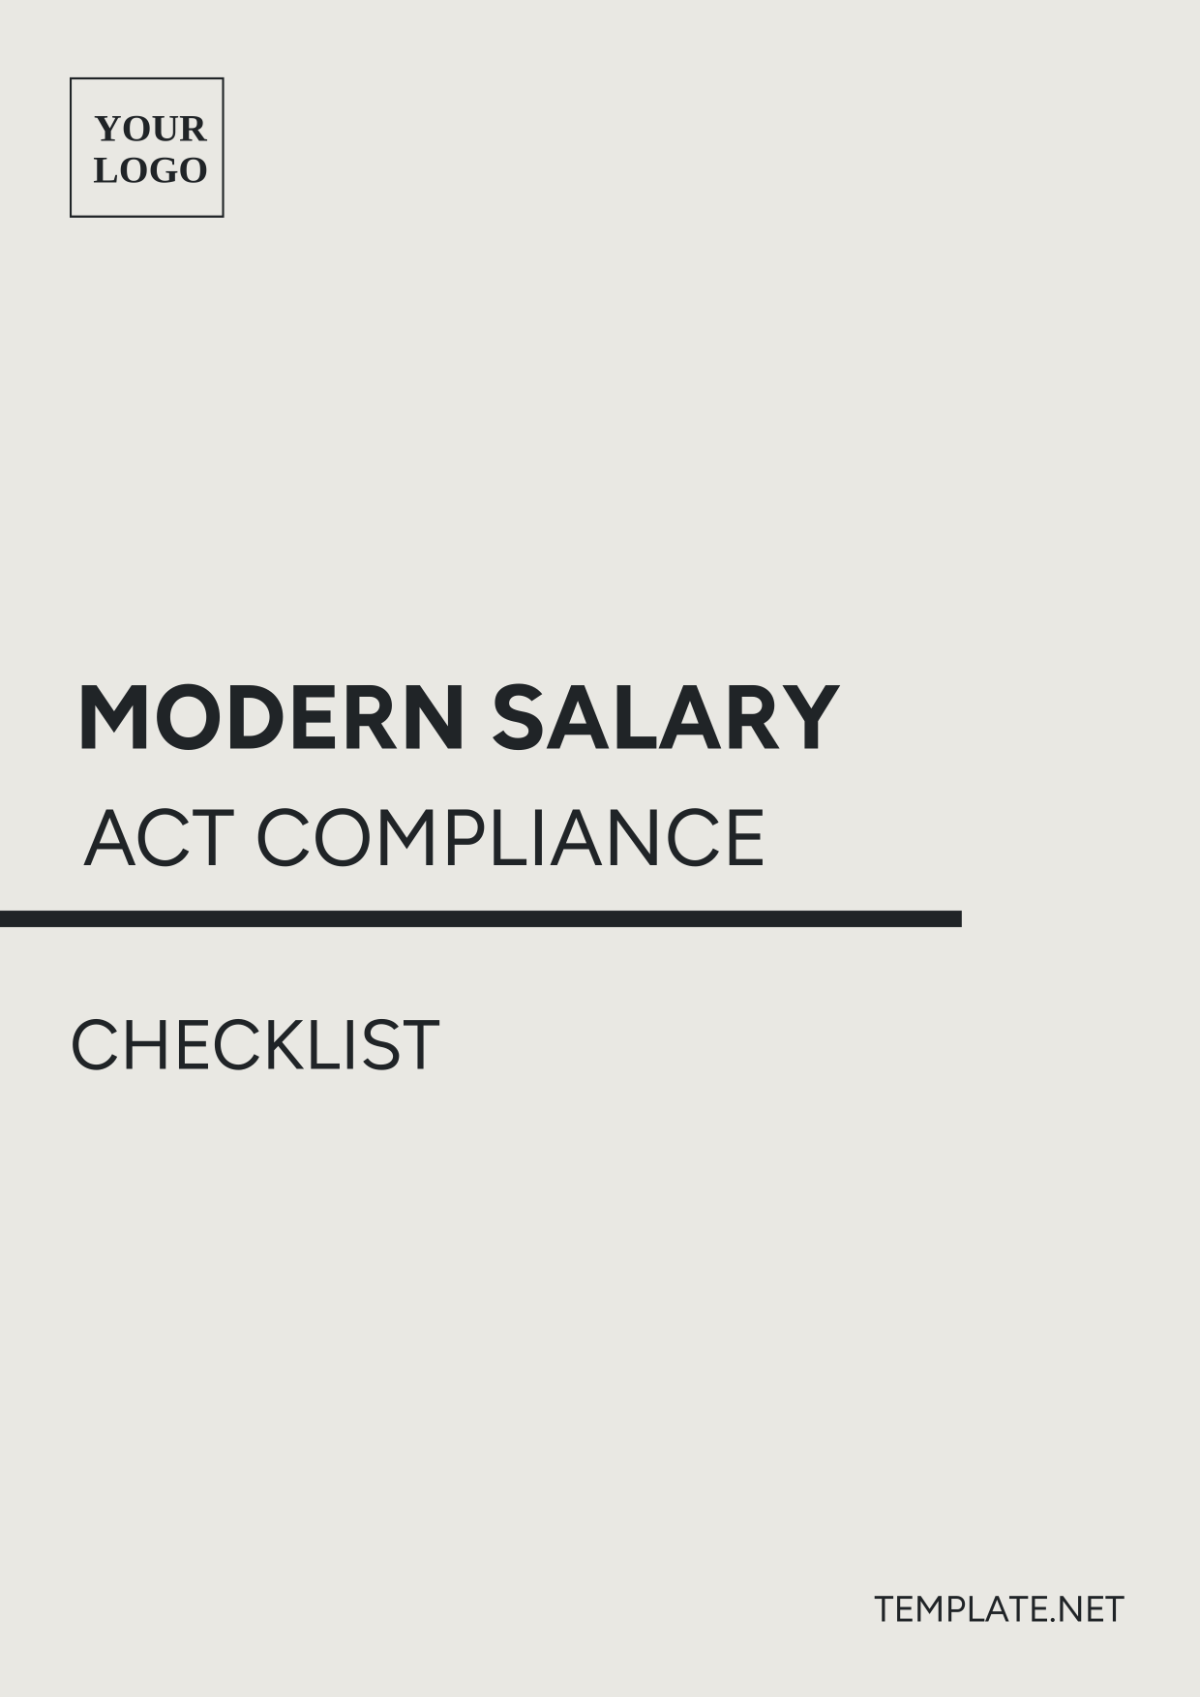 Modern Salary Act Compliance Checklist Template